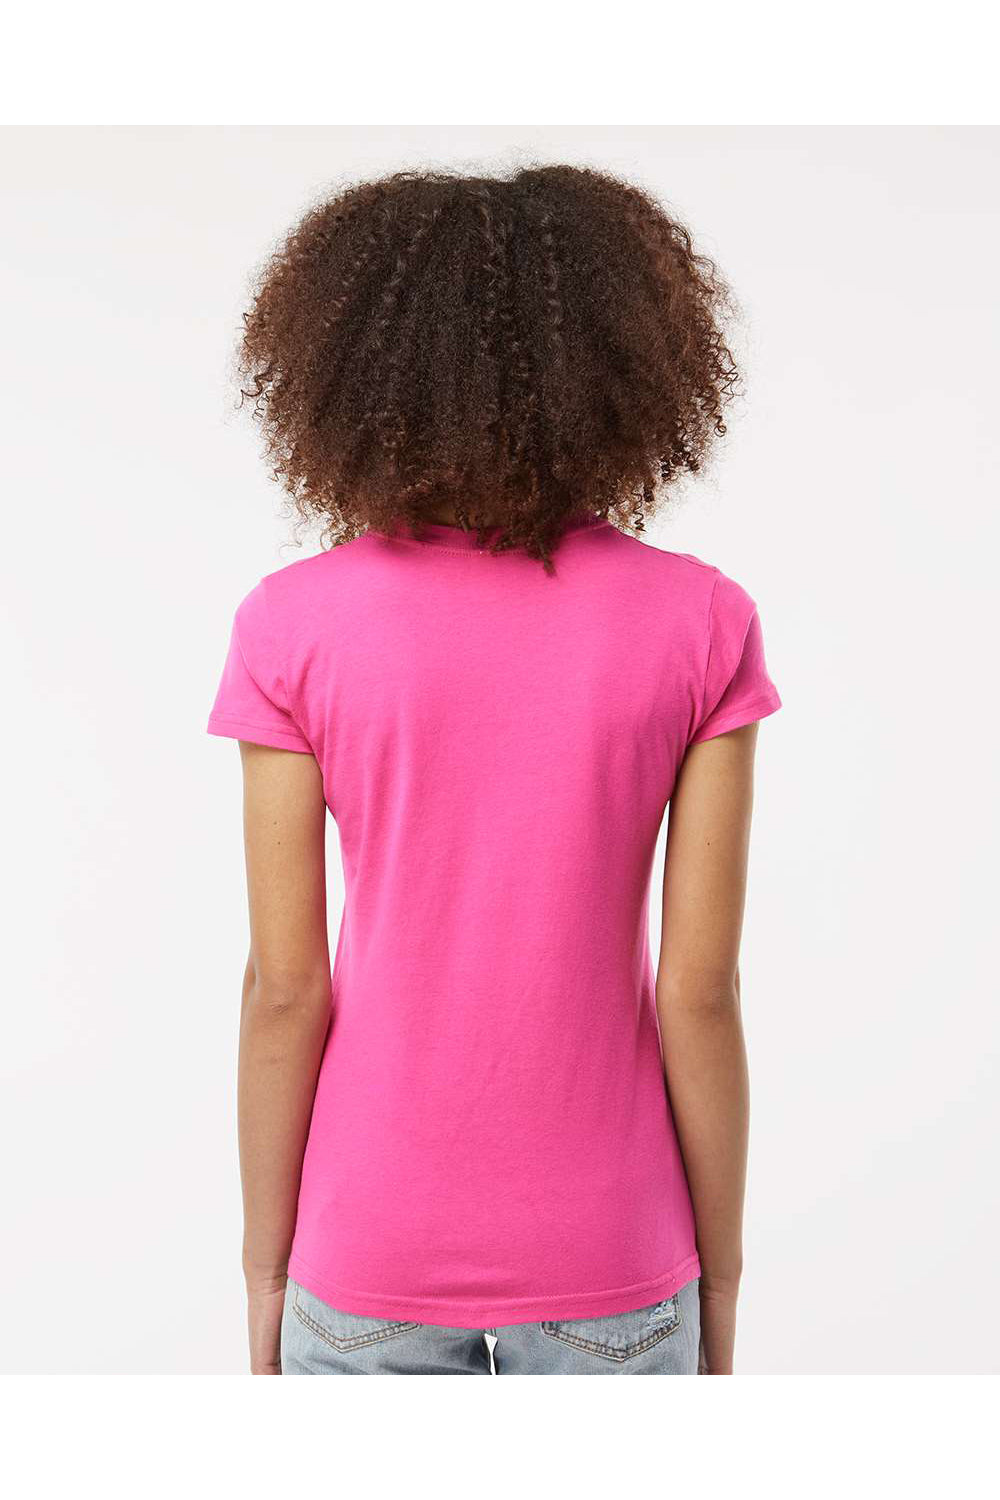 Tultex 213 Womens Fine Jersey Slim Fit Short Sleeve Crewneck T-Shirt Fuchsia Pink Model Back